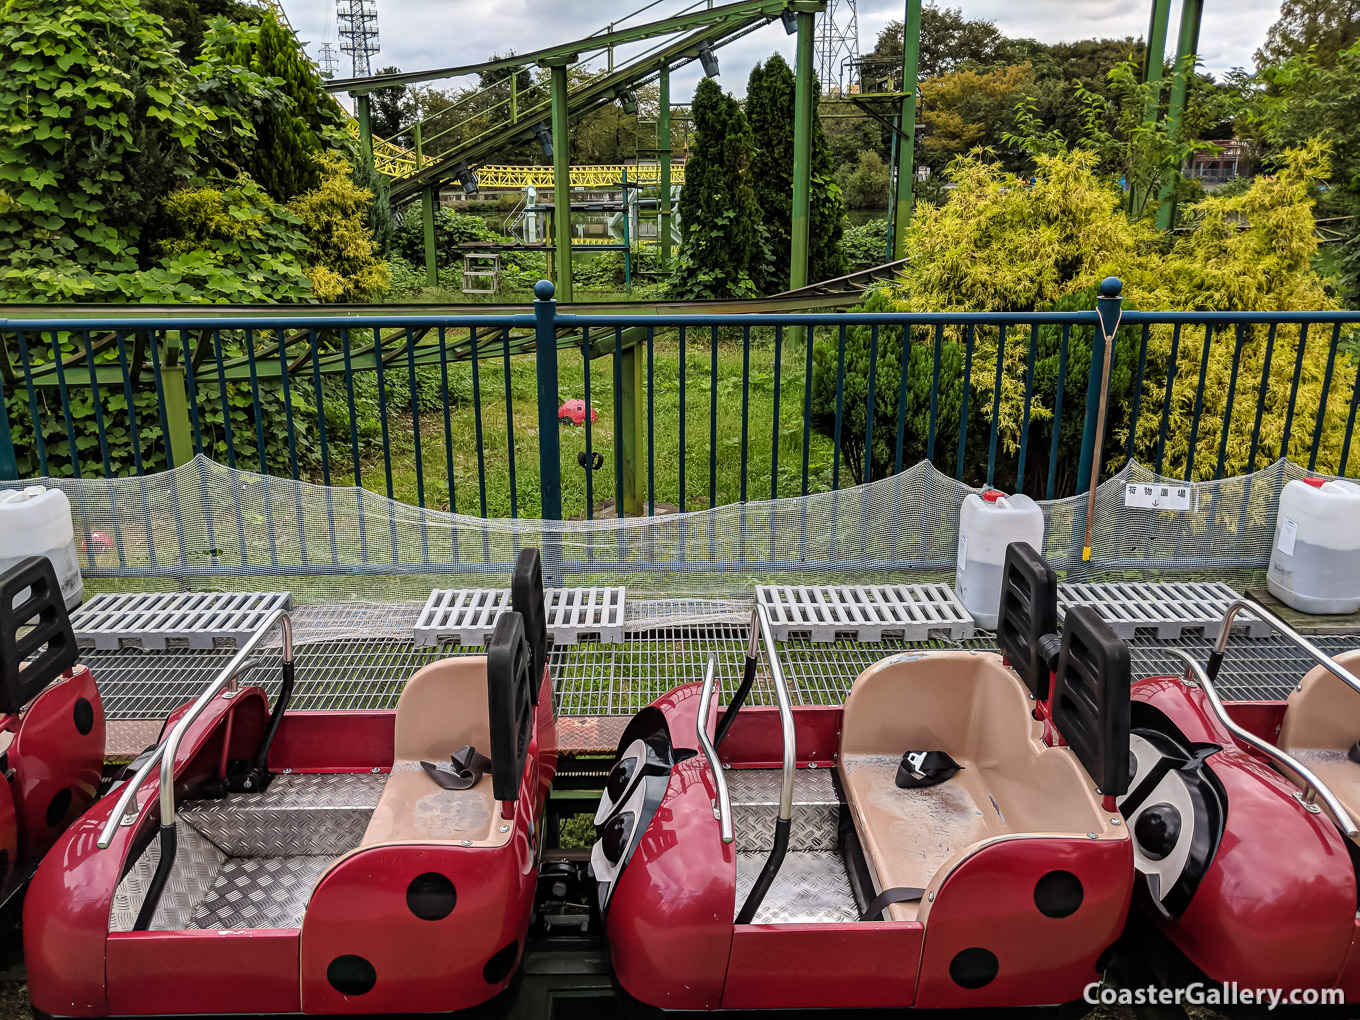 Tentomushi roller coaster built by Zierer